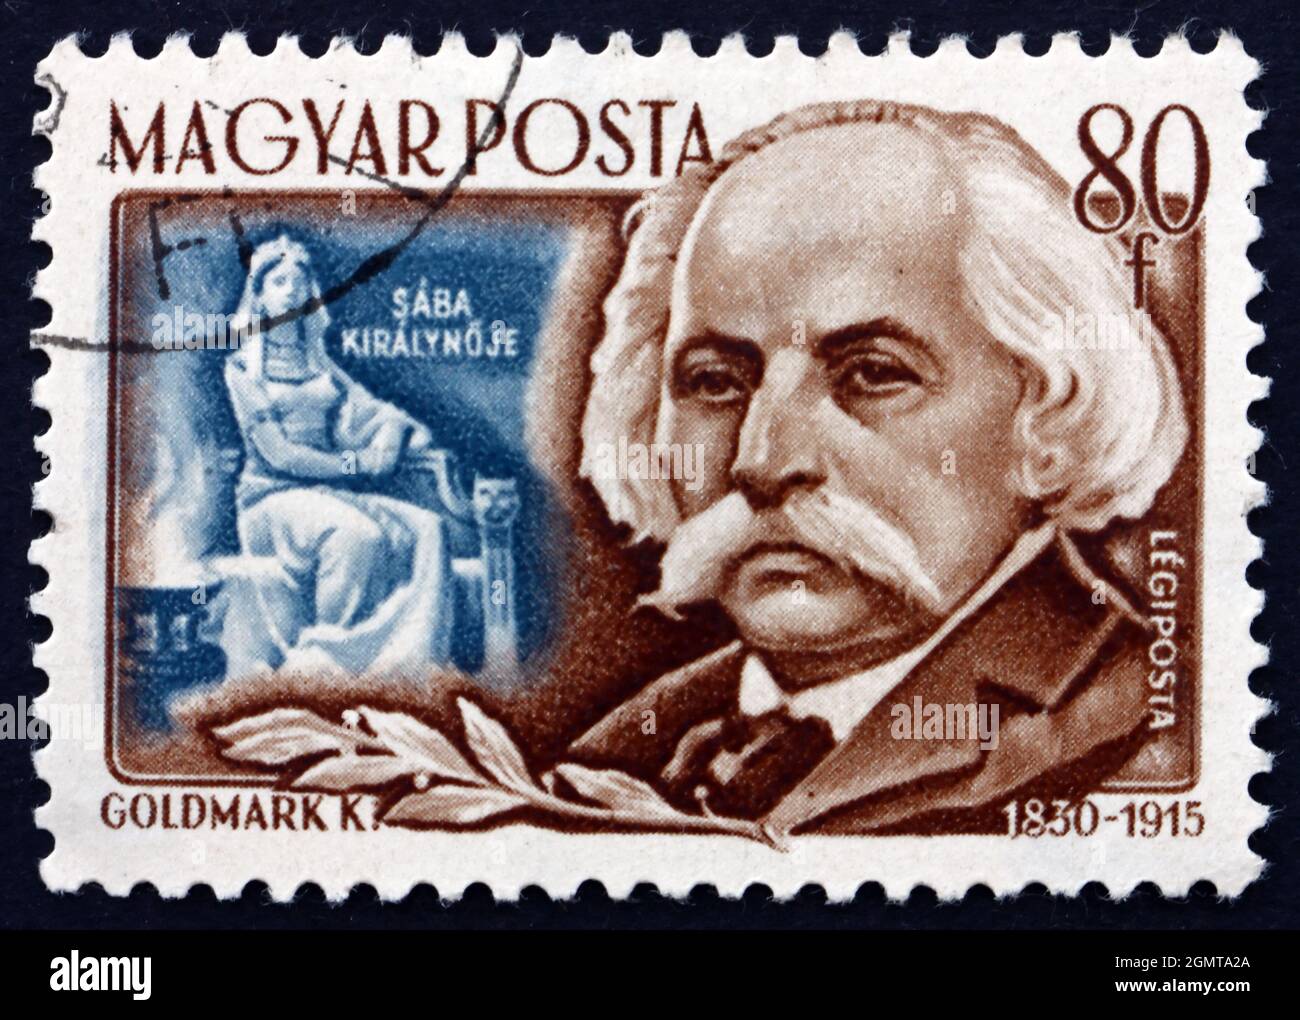 HUNGARY - CIRCA 1953: a stamp printed in the Hungary shows Karl Goldmark, Hungarian Composer, circa 1953 Stock Photo